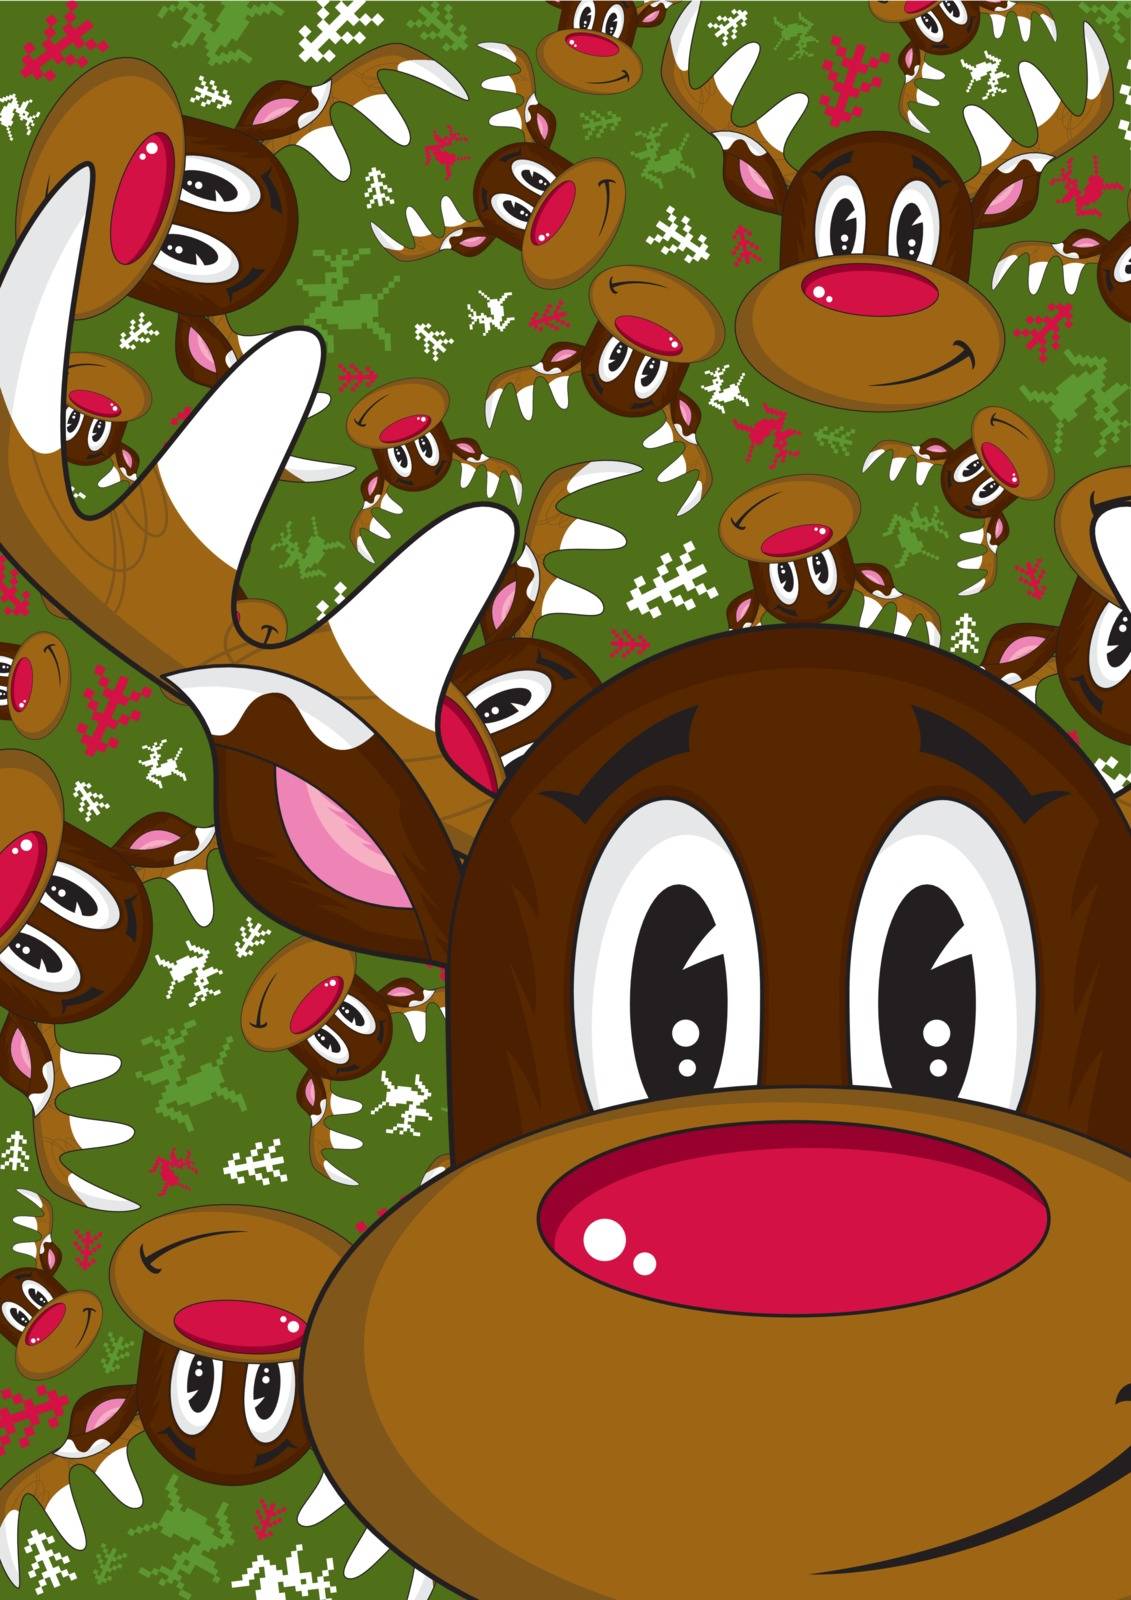 Adorably Cute Cartoon Rudolph the Reindeer Christmas Illustration by Mark Murphy Creative